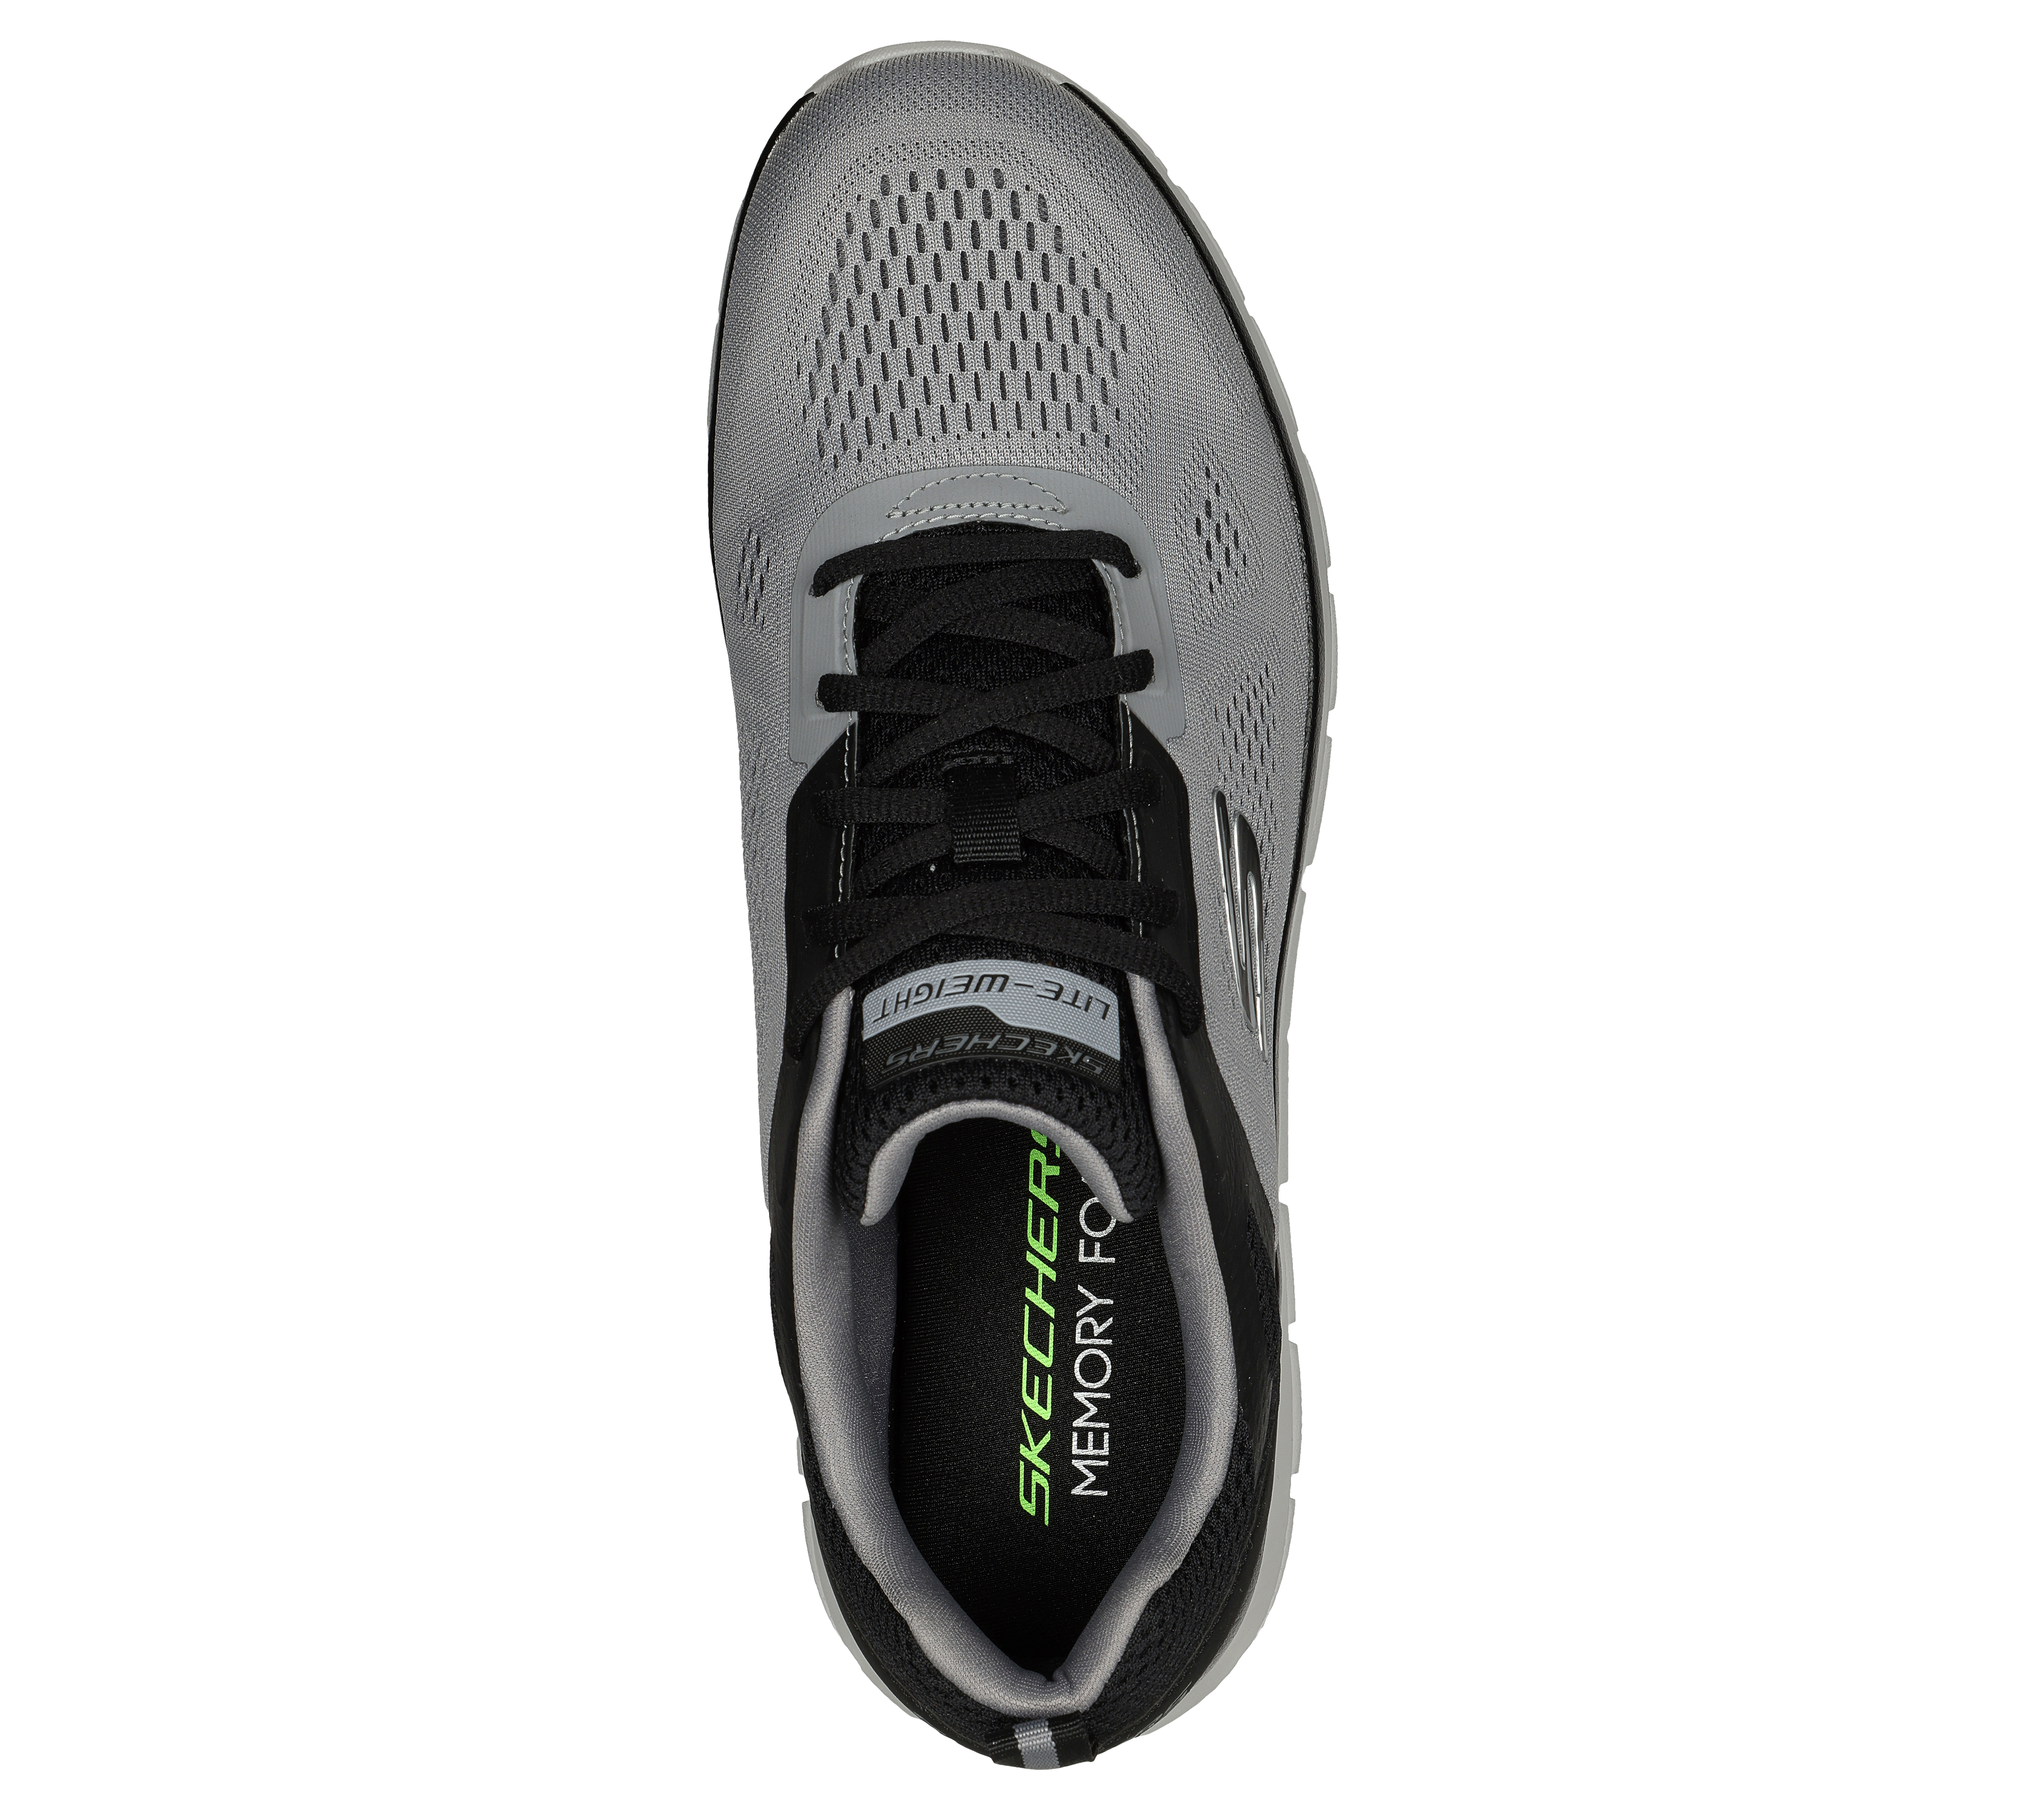 Zapatillas para caminar Hombre Skechers Track Broader Azul-232698/NVY